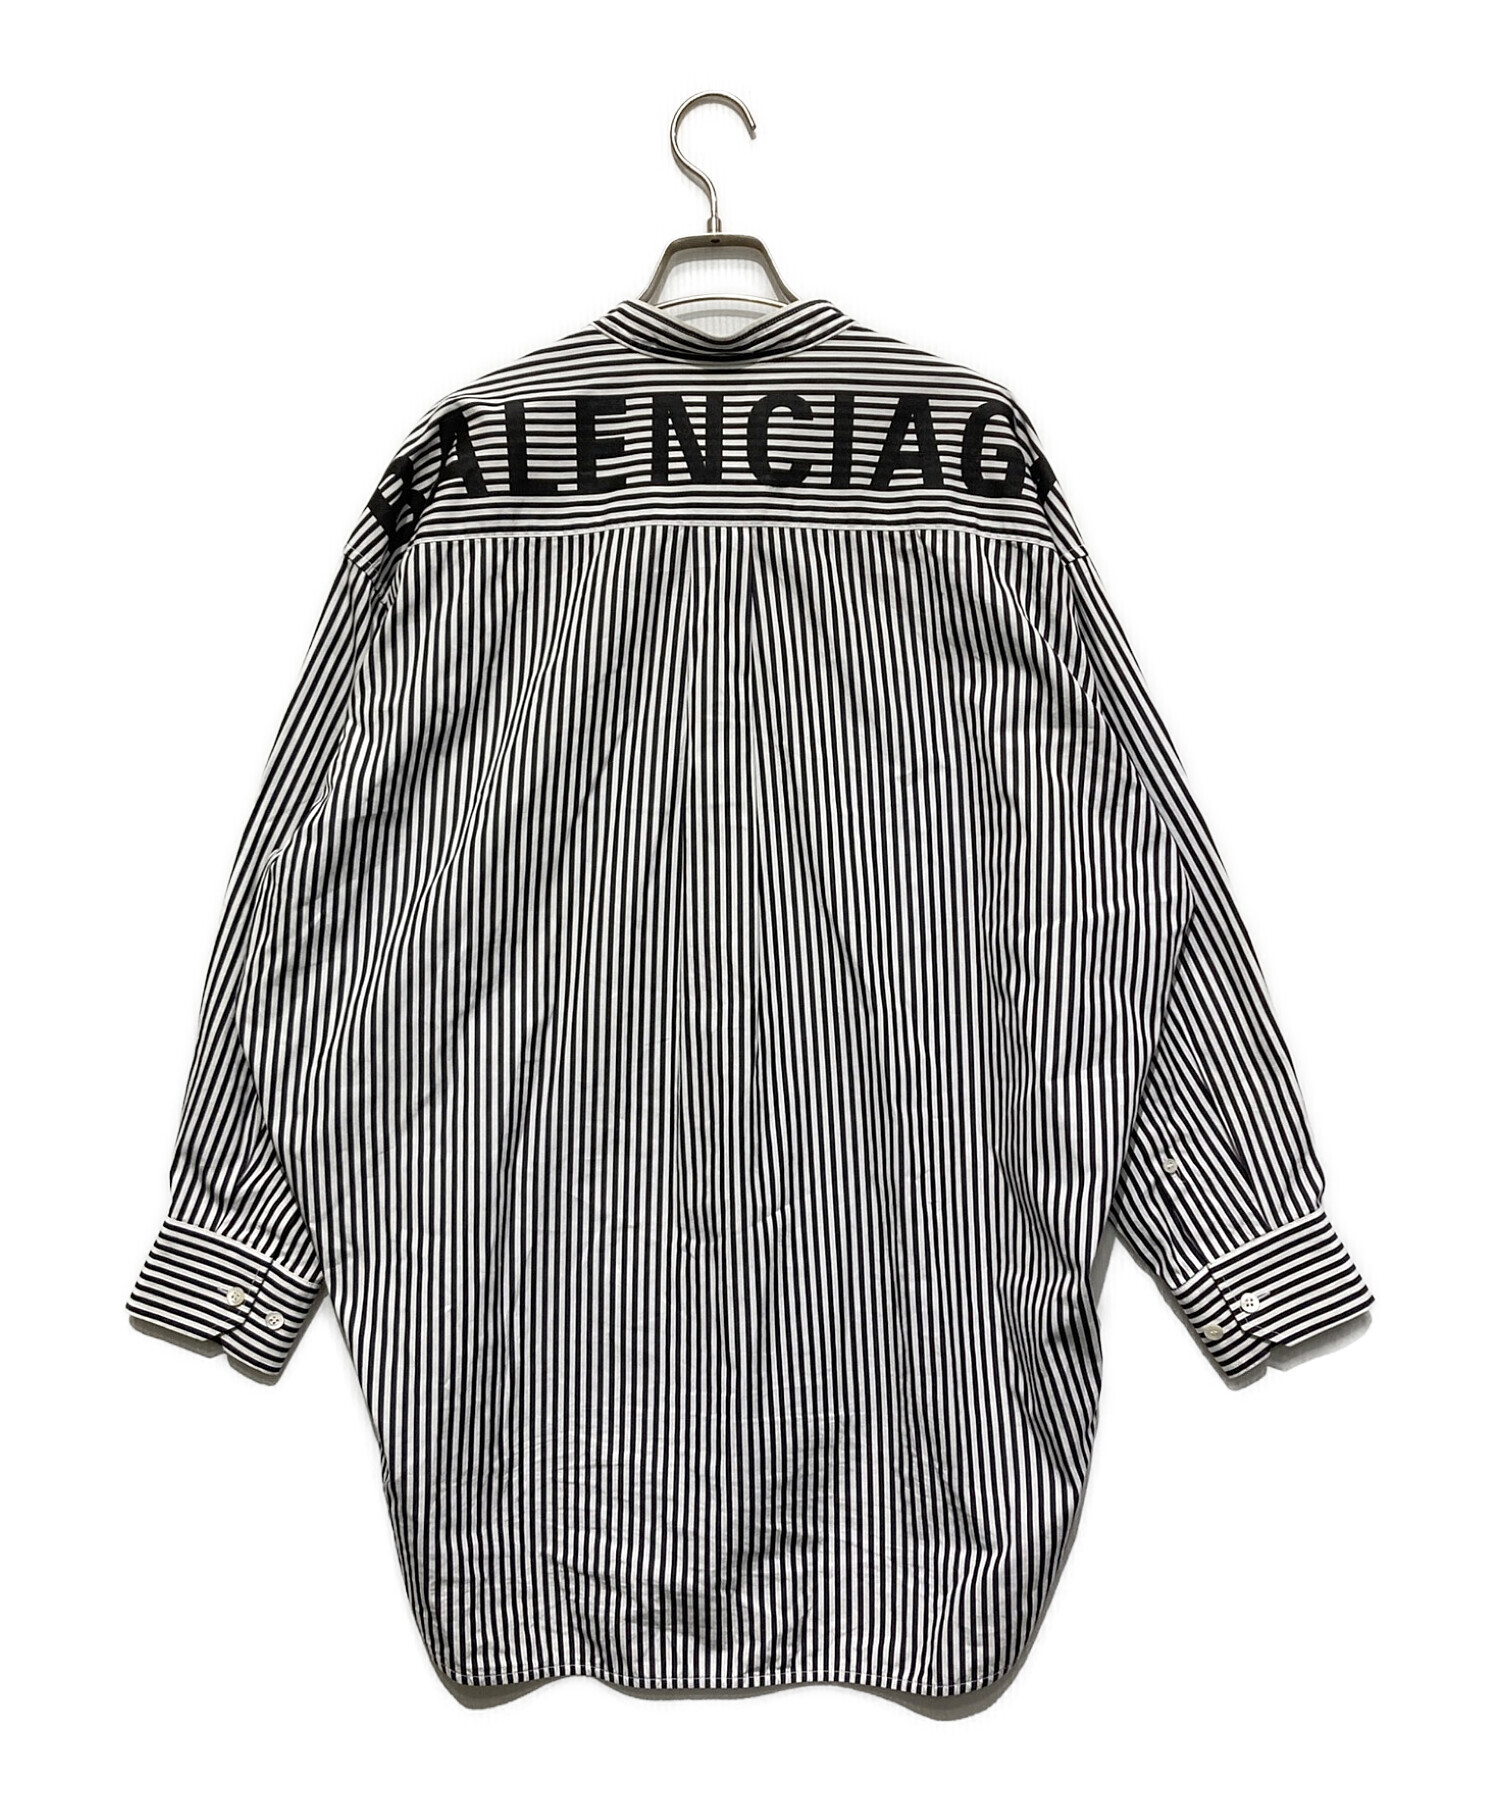 BALENCIAGA (バレンシアガ) ニュースウィングシャツ ホワイト×ブラック サイズ:SIZE 34